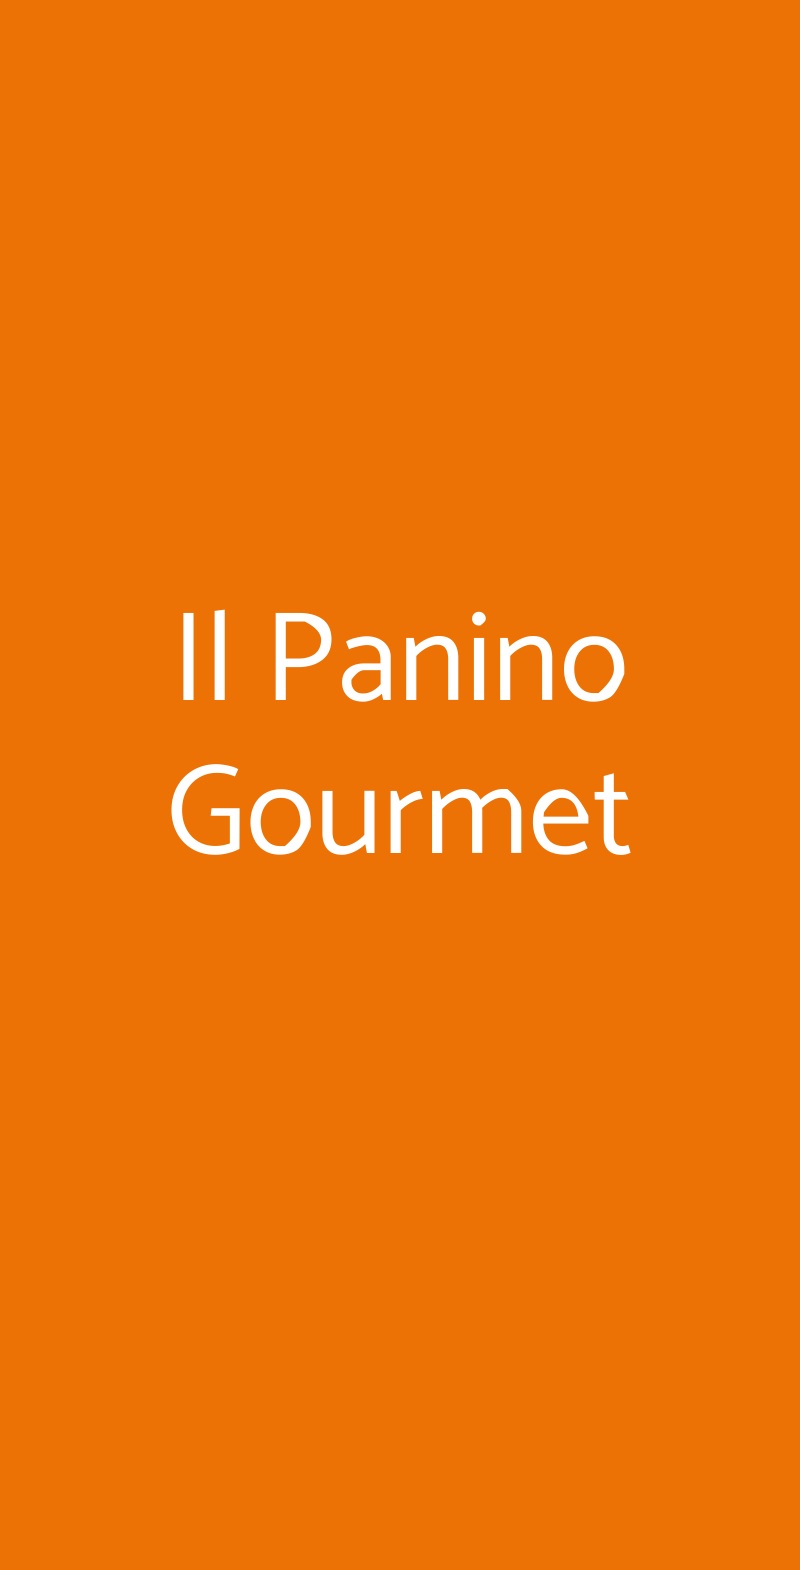 Il Panino Gourmet Piacenza menù 1 pagina